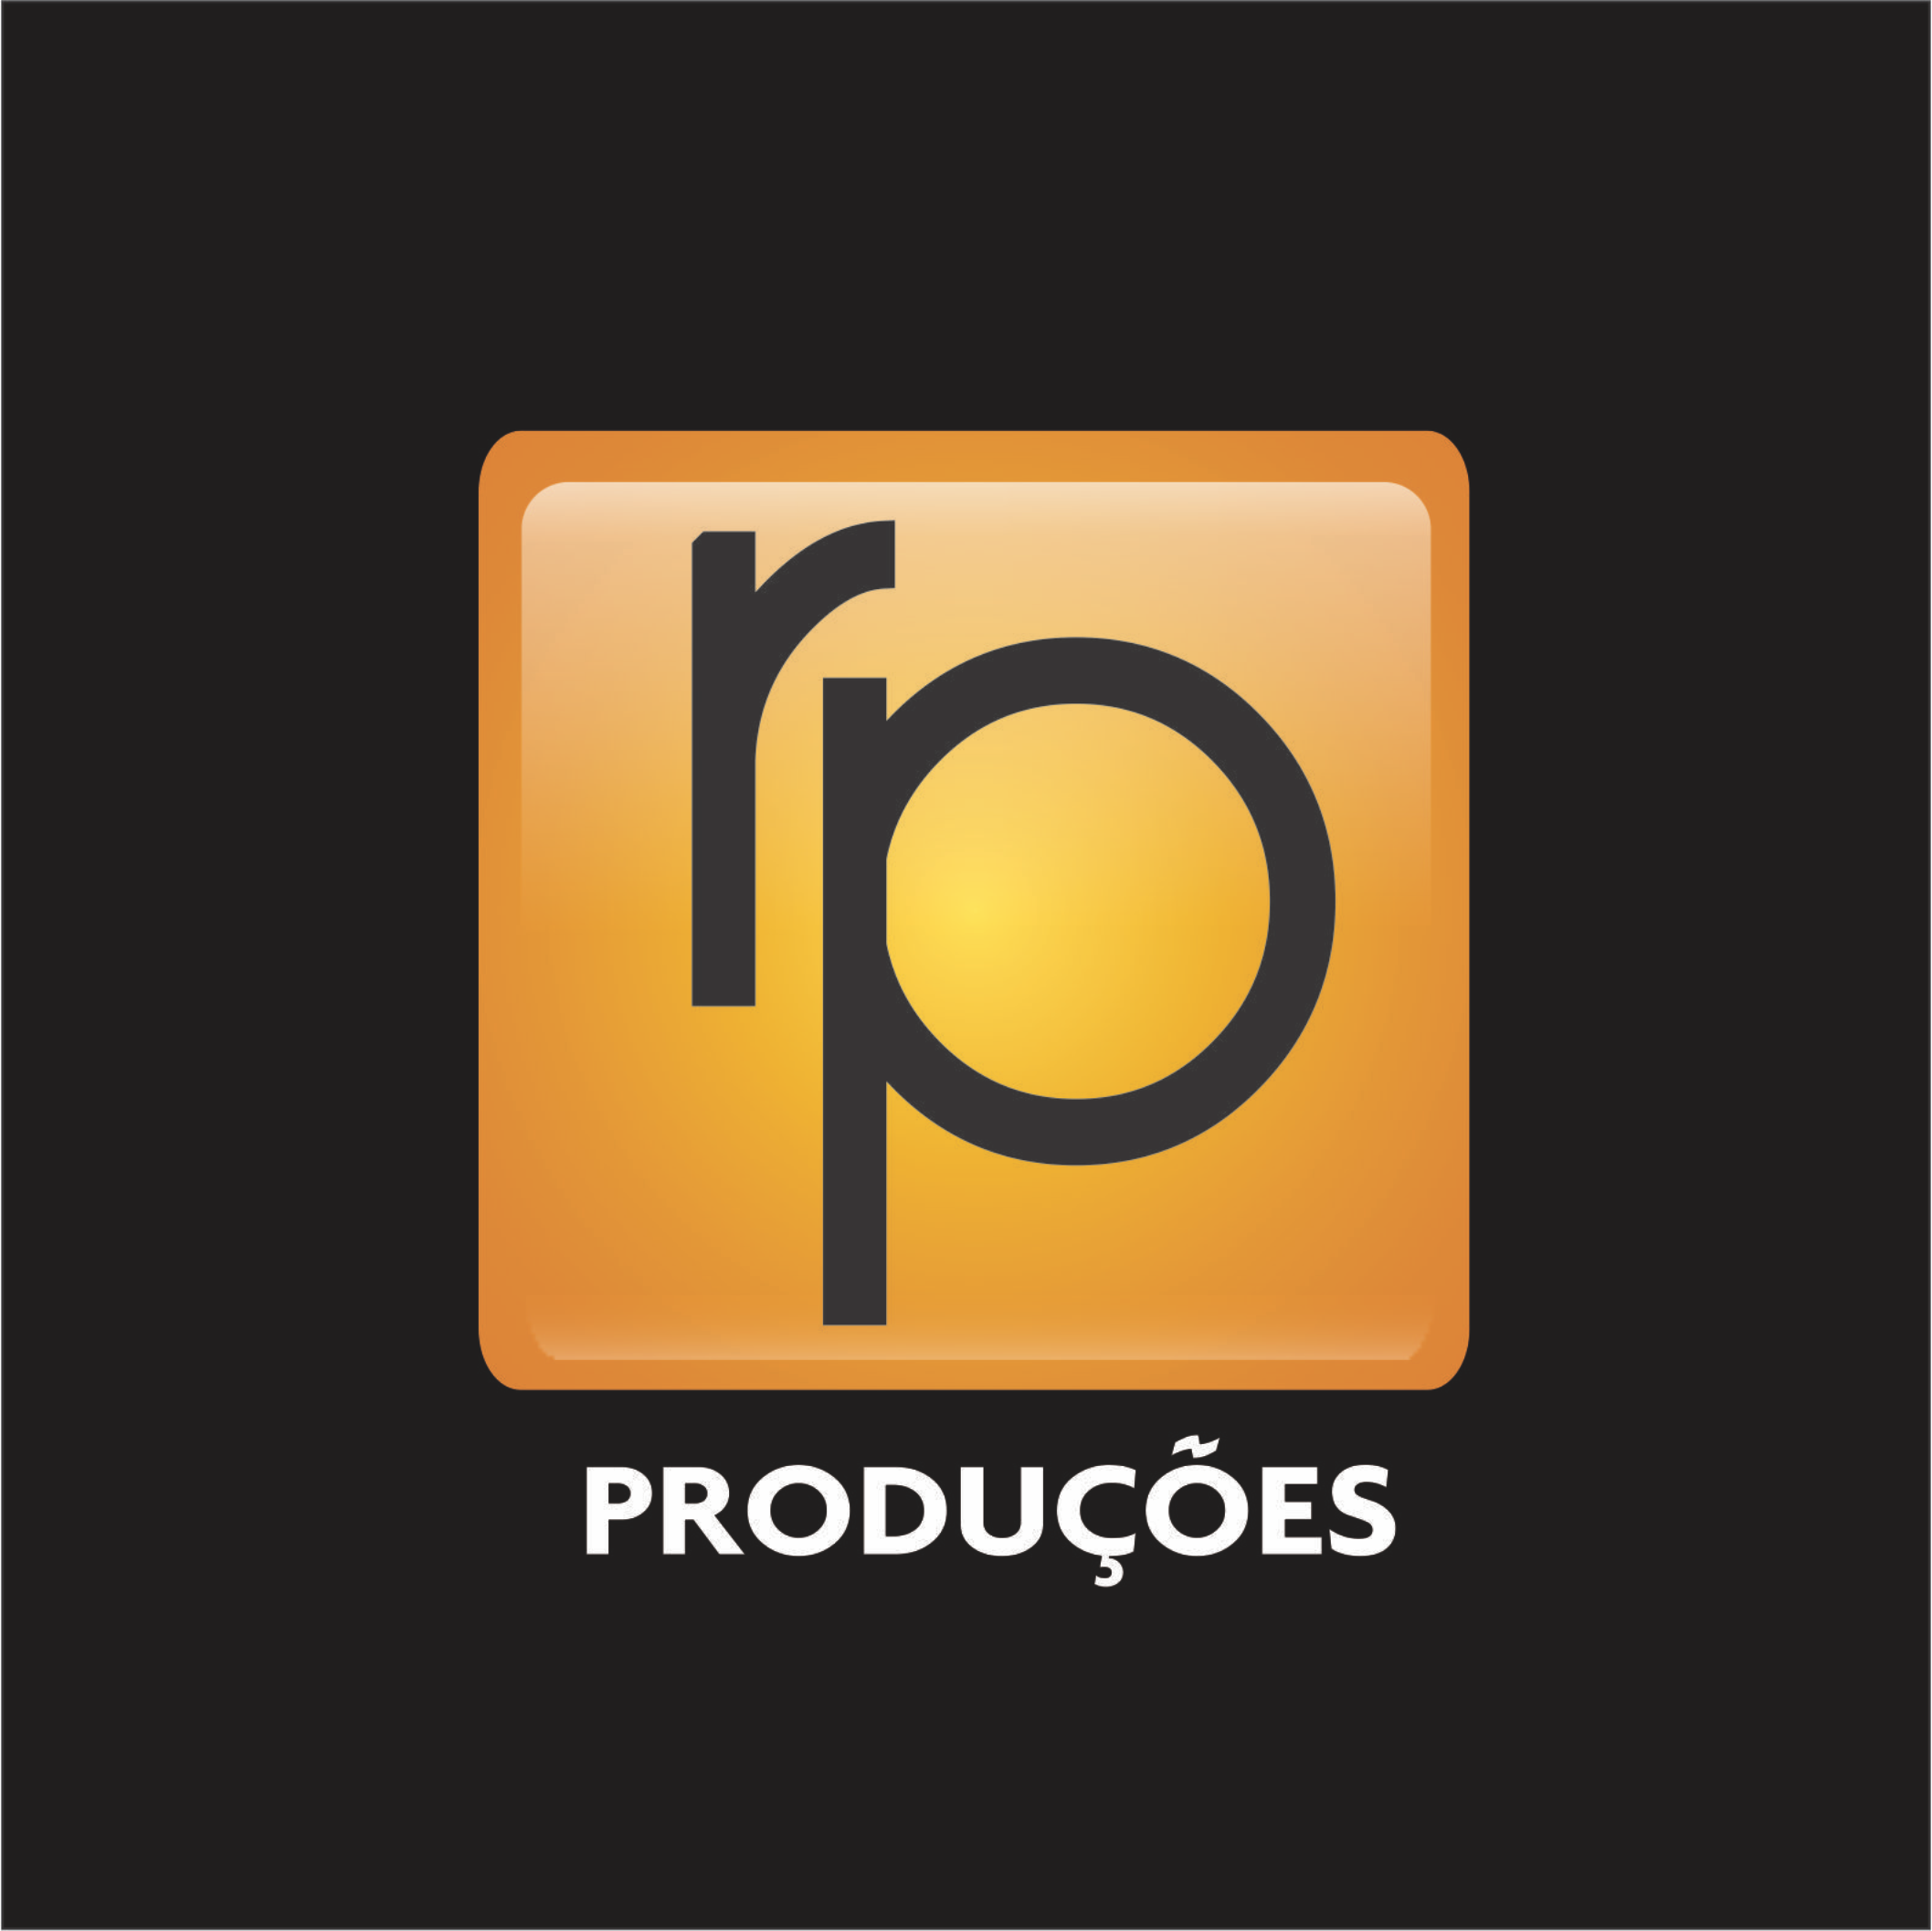 https://www.pernascaipiras.com.br/wp-content/uploads/2020/07/RPProduções.png